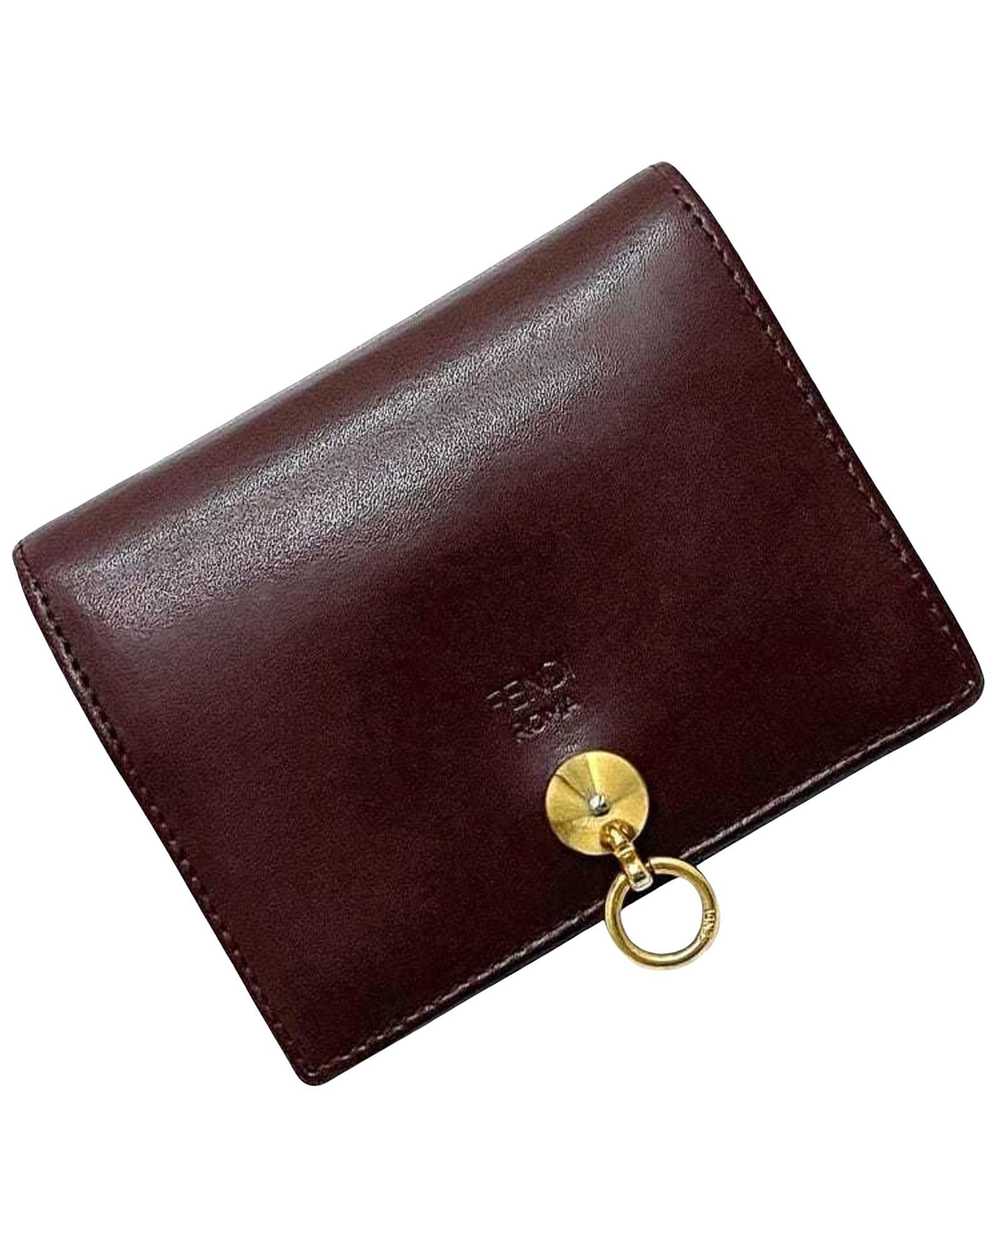 Fendi Burgundy Leather Compact Wallet - image 1